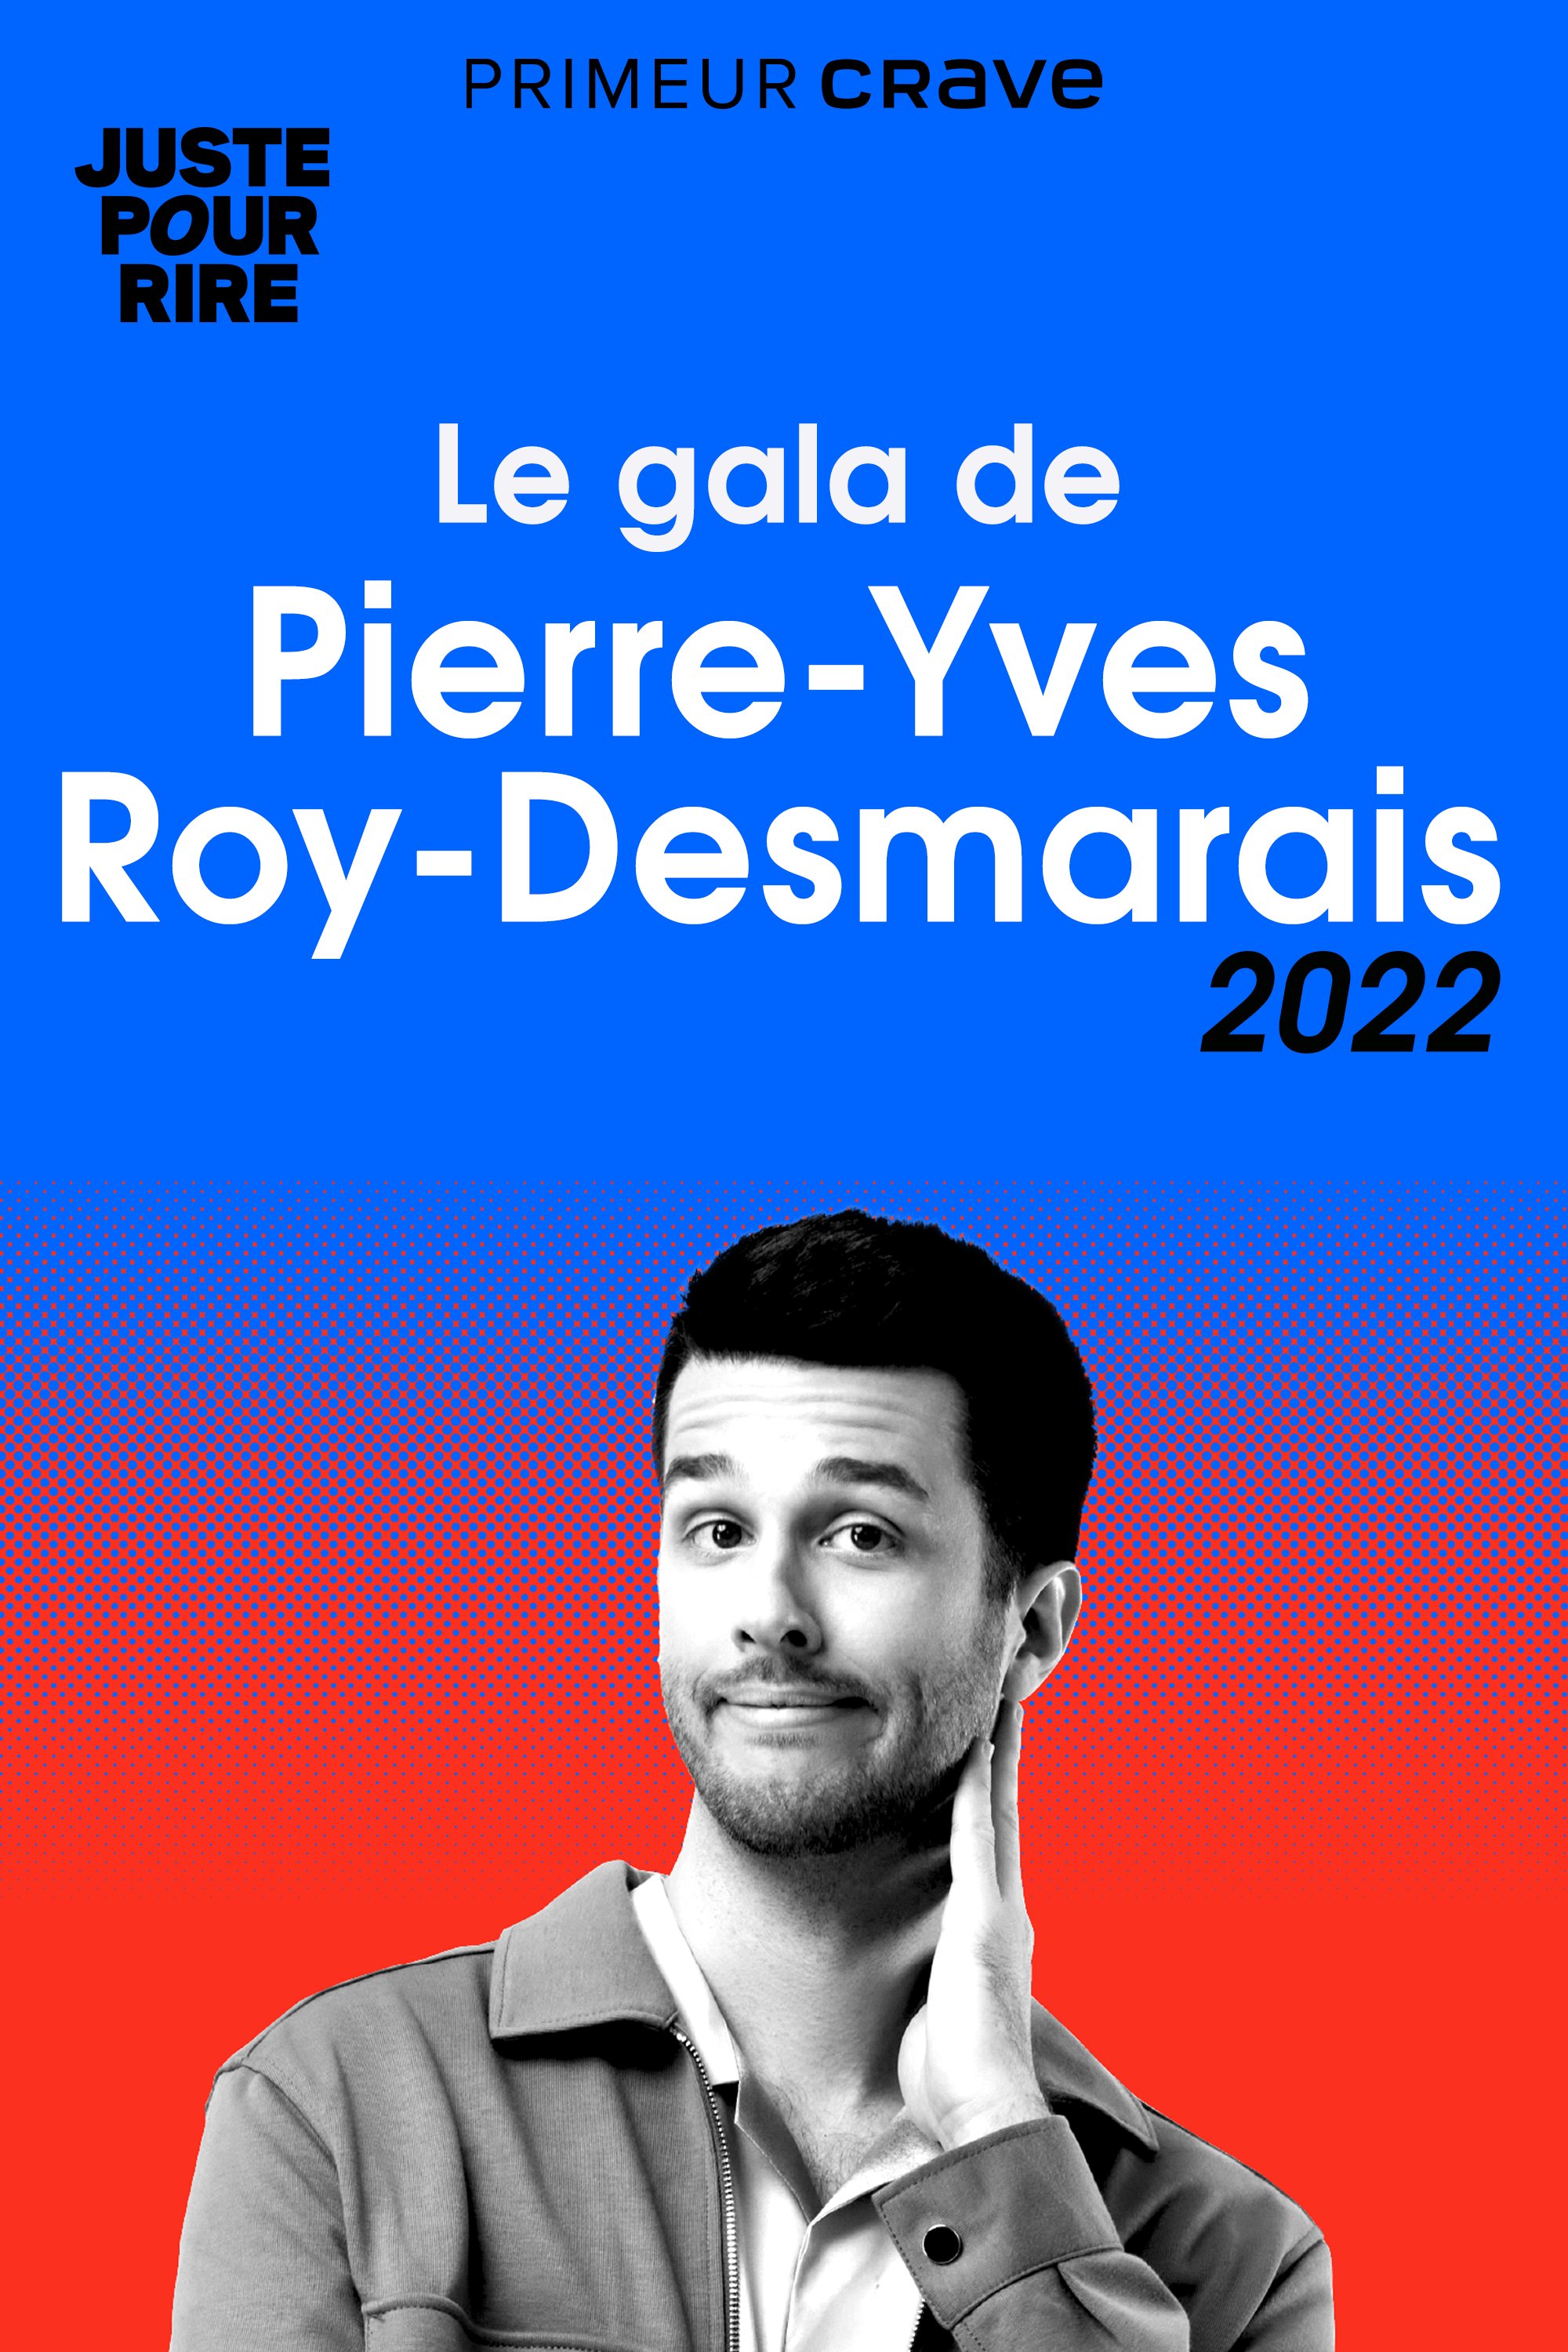 QFR - Le gala de Pierre-Yves Roy-Desmarais - partie 2 (2022)